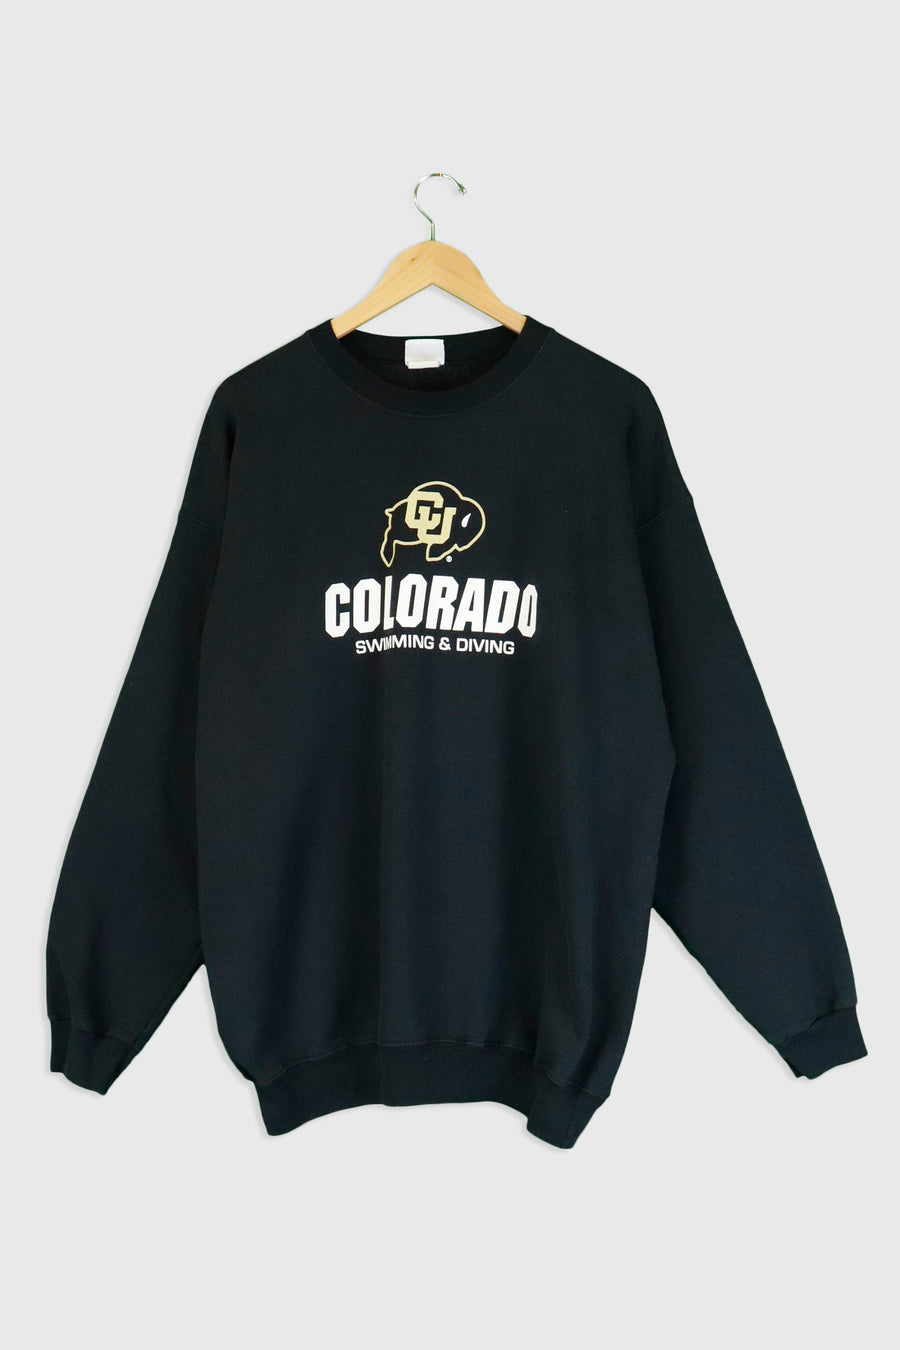 Vintage Colorado University Swim Team Sweatshirt Sz XL